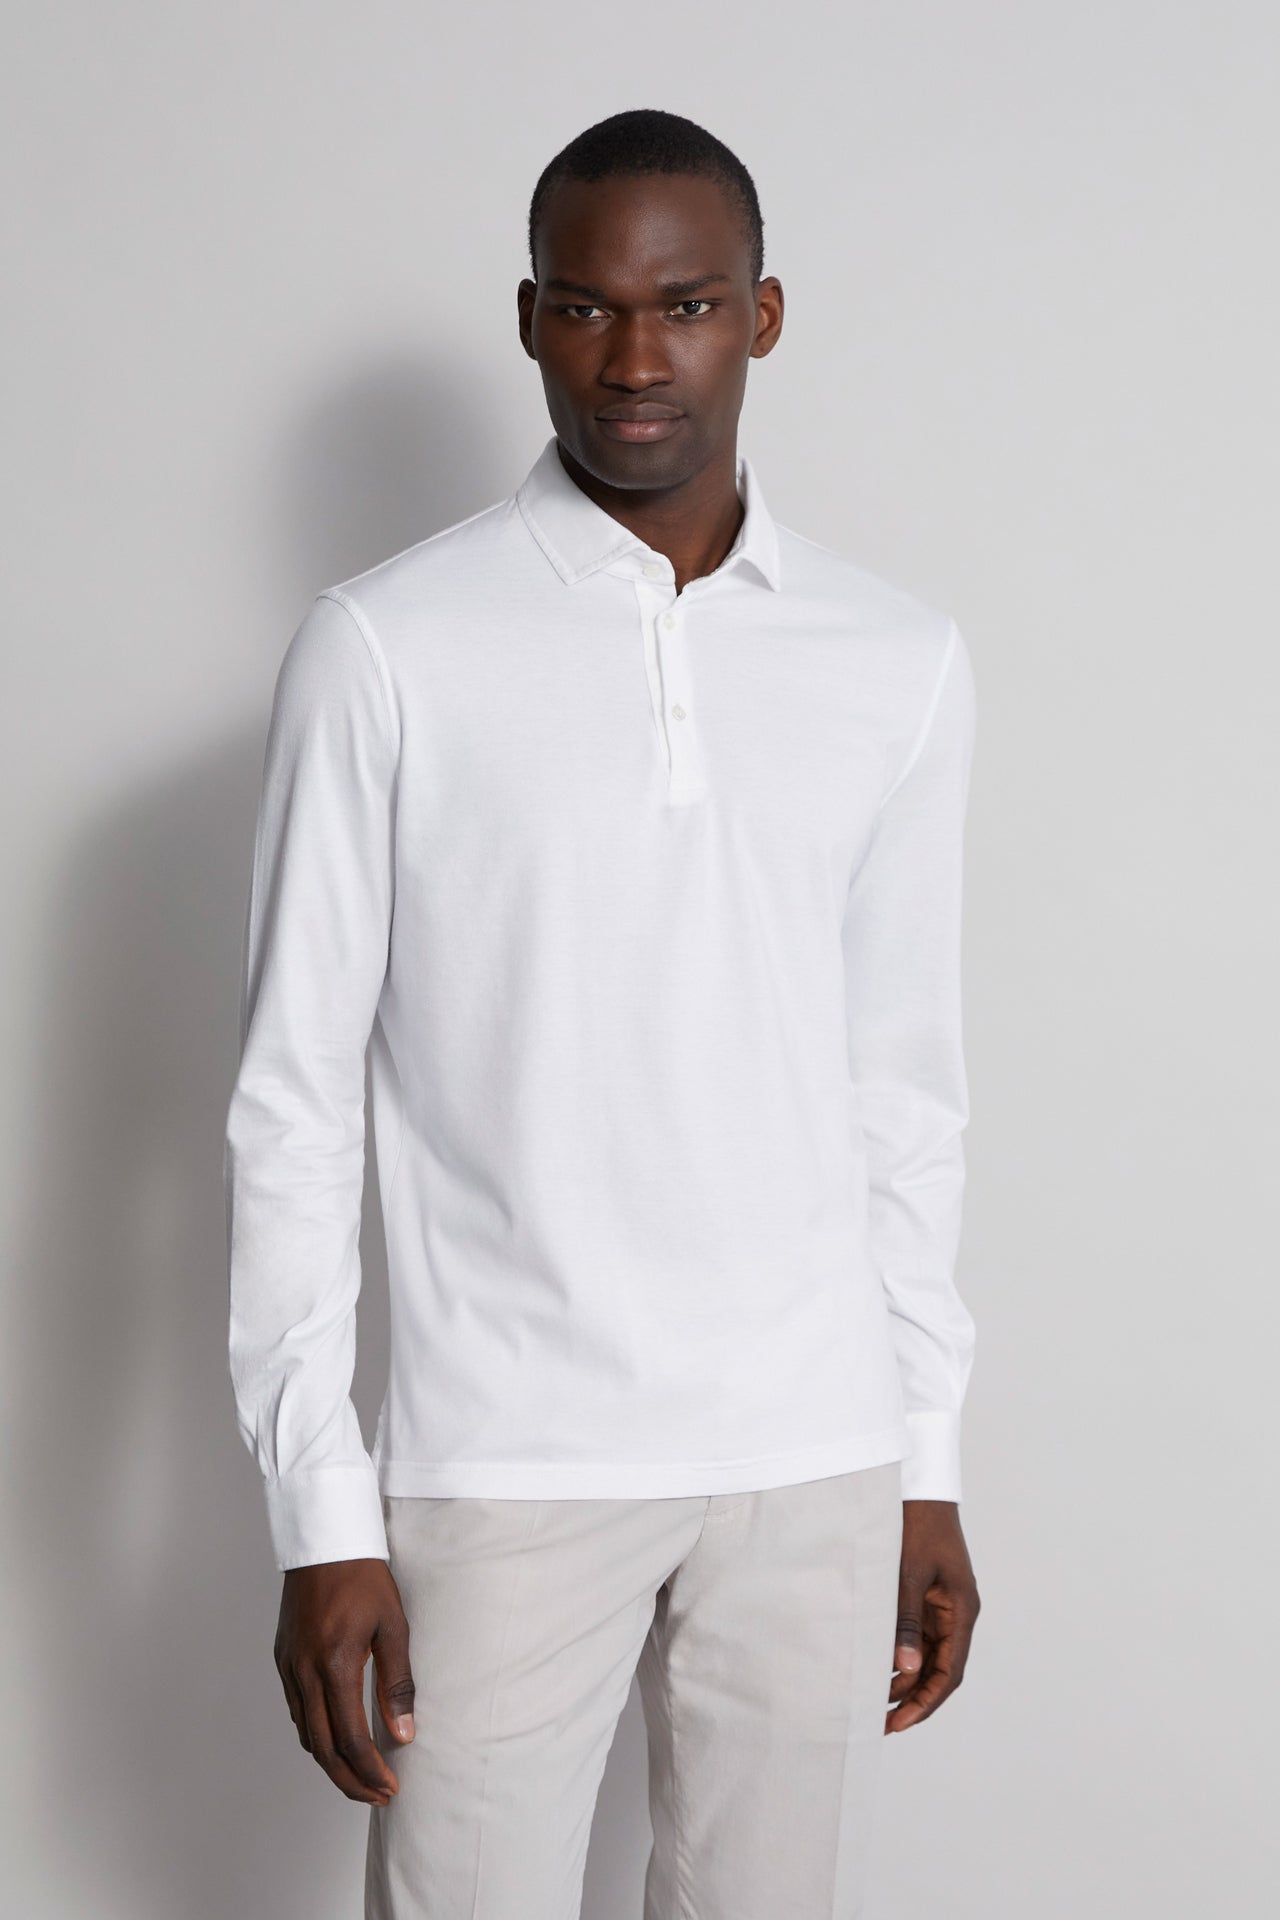 Zero the organic cotton long sleeves polo shirt